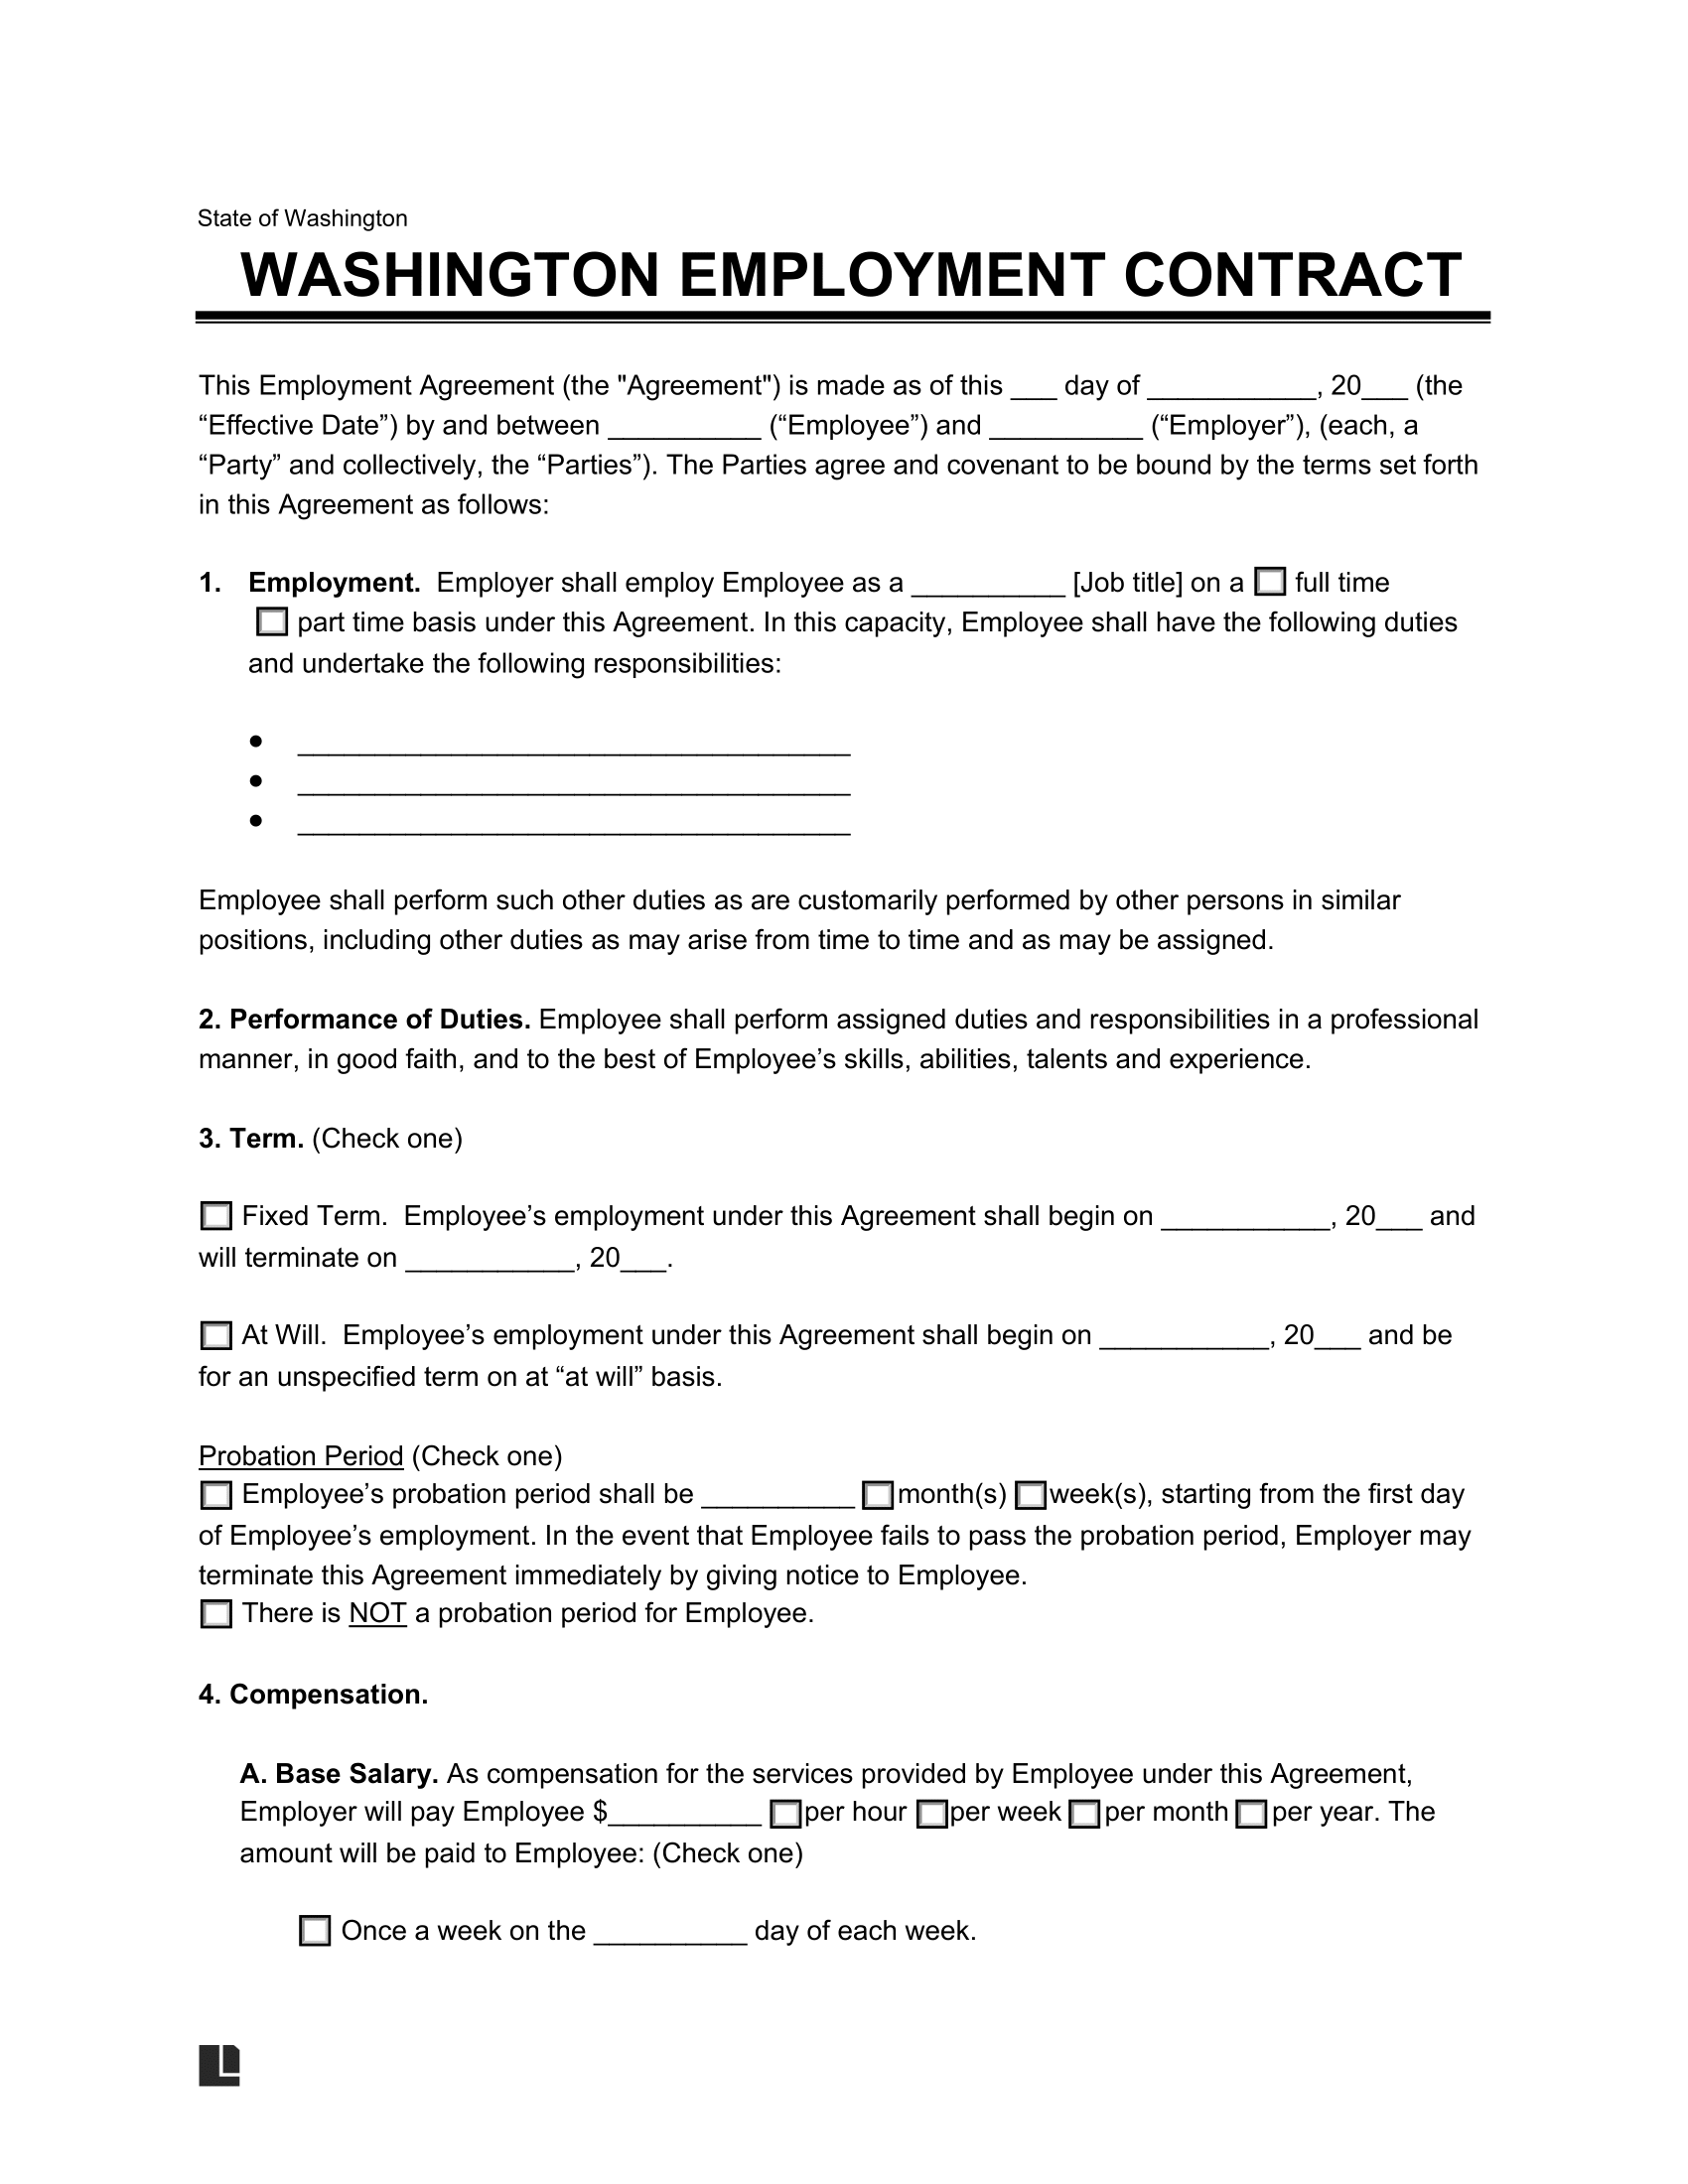 Washington Employment Contract Template